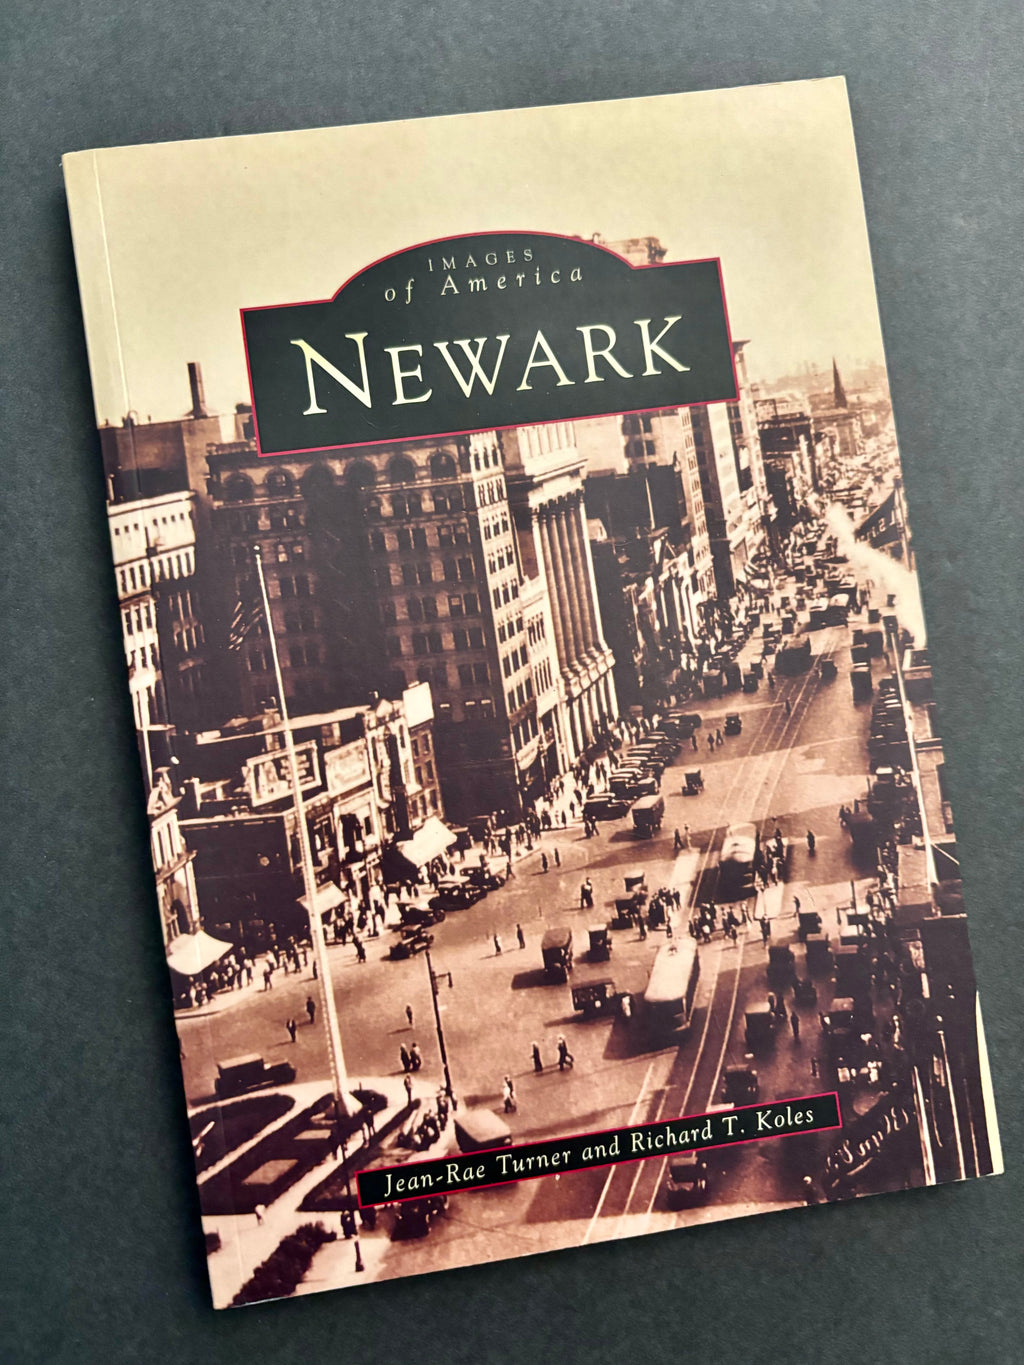 Images of America: Newark- By Jean-Rae Turner and Richard T. Koles